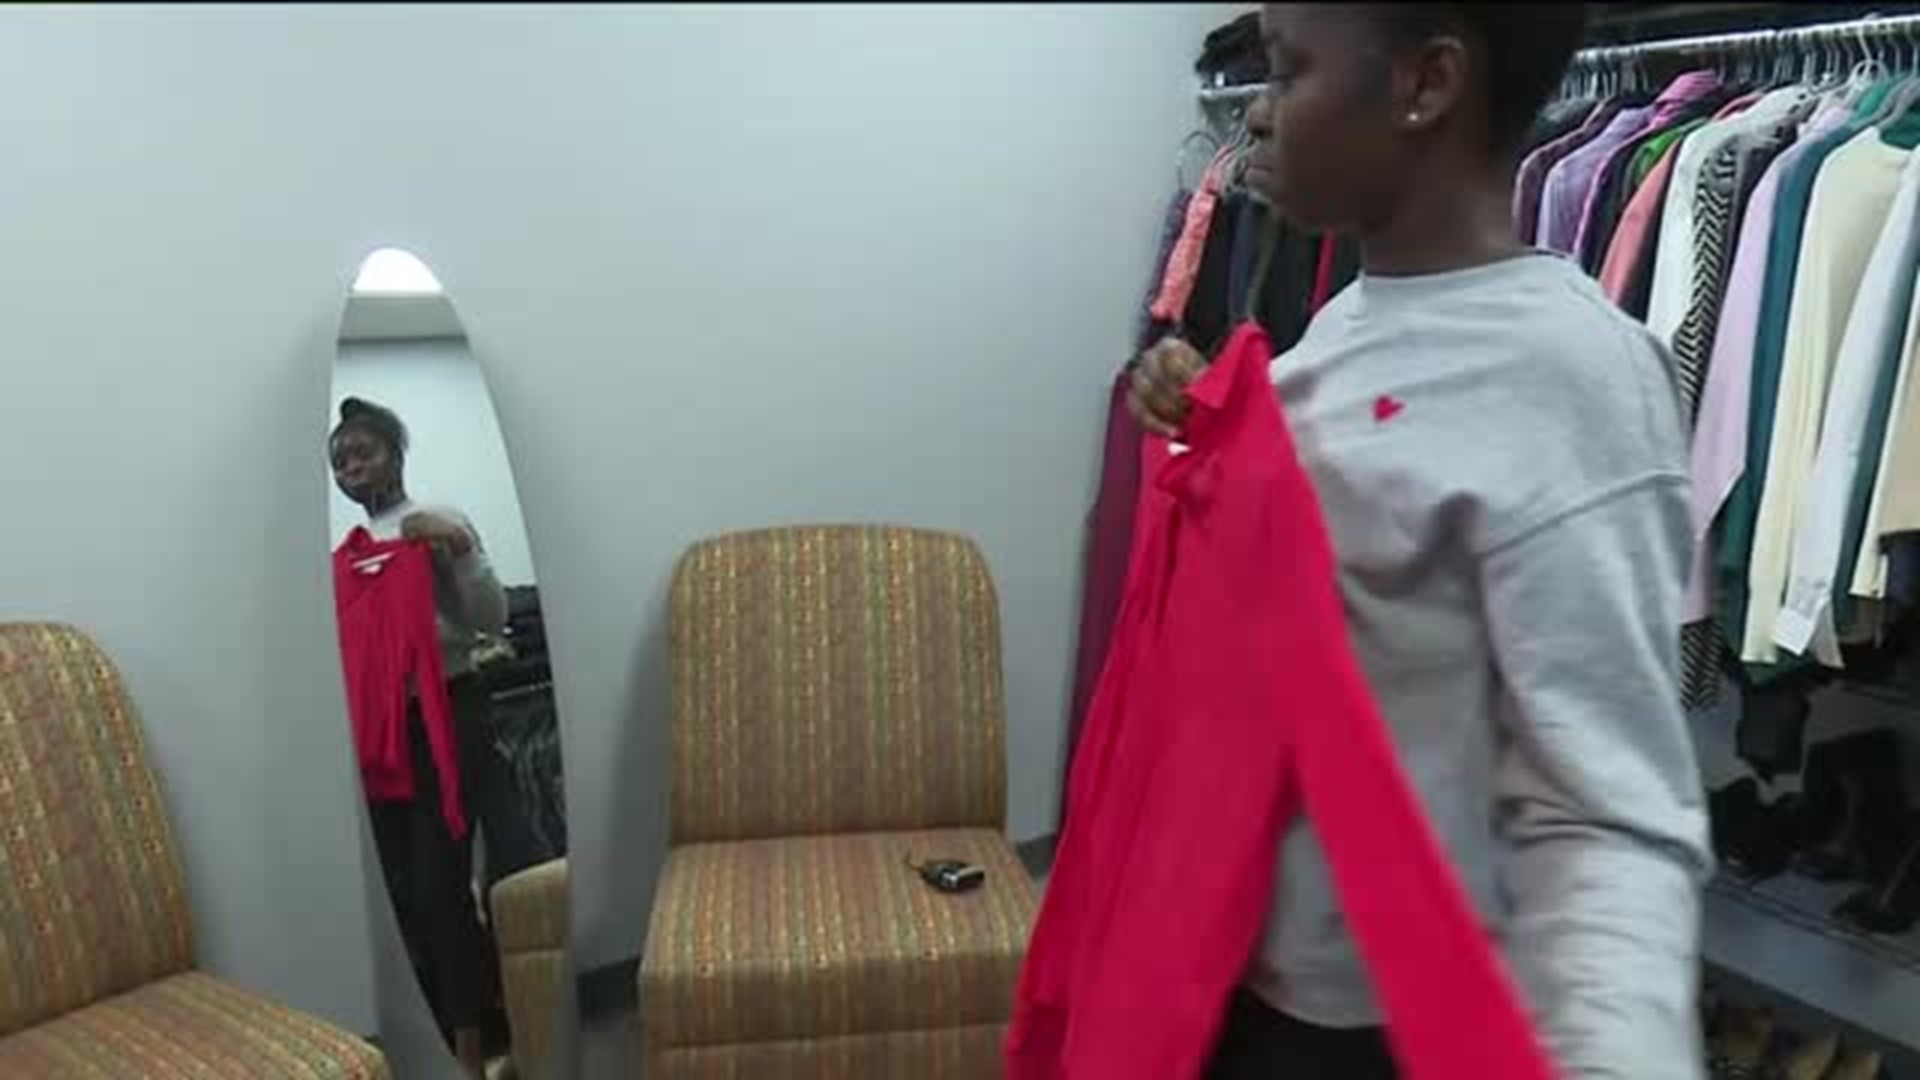 Career Closet Helps Students Dress to Impress